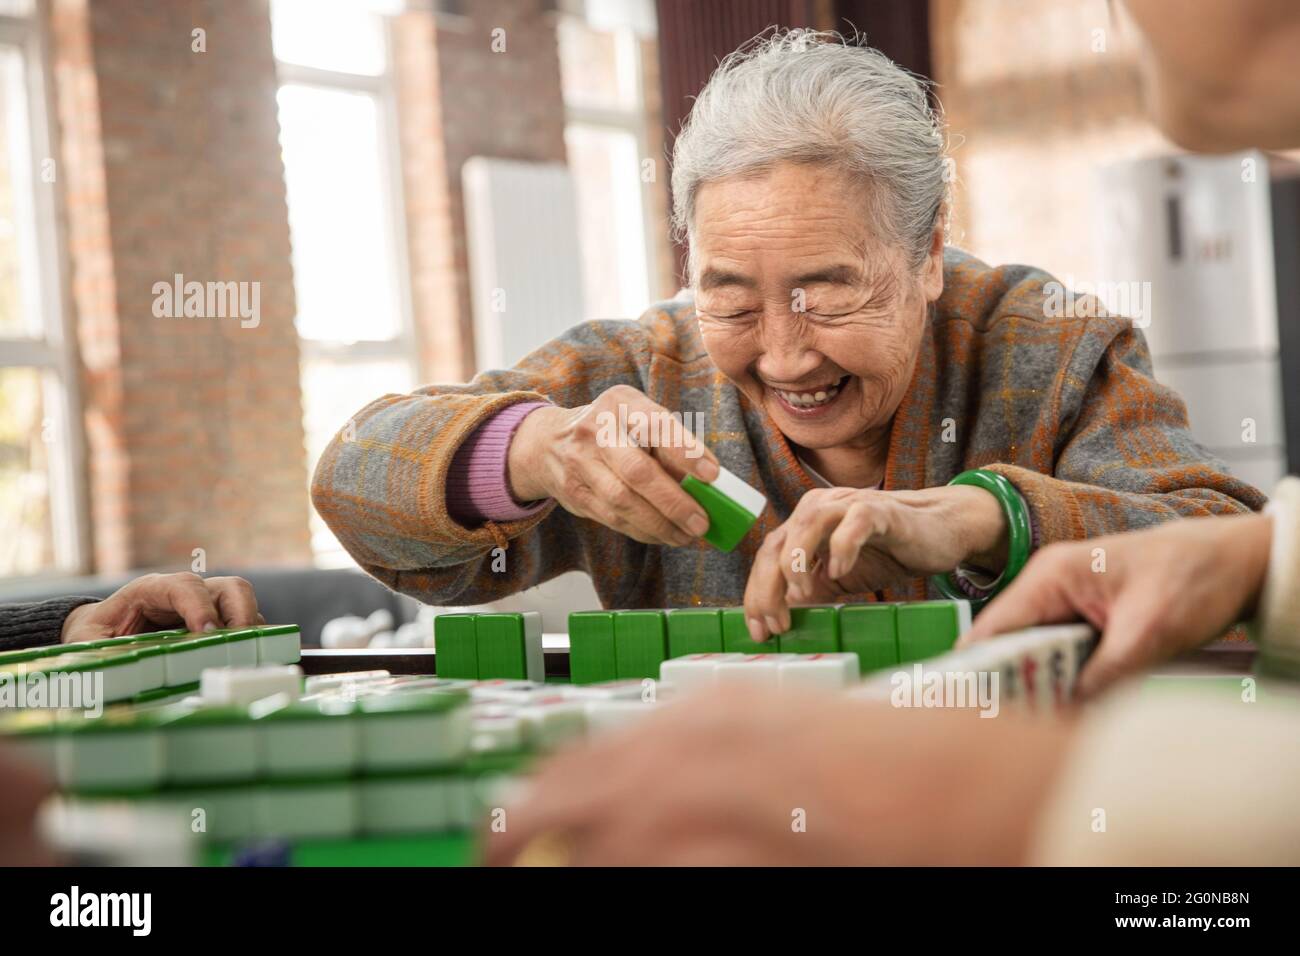 2.065 fotos de stock e banco de imagens de Mahjong - Getty Images